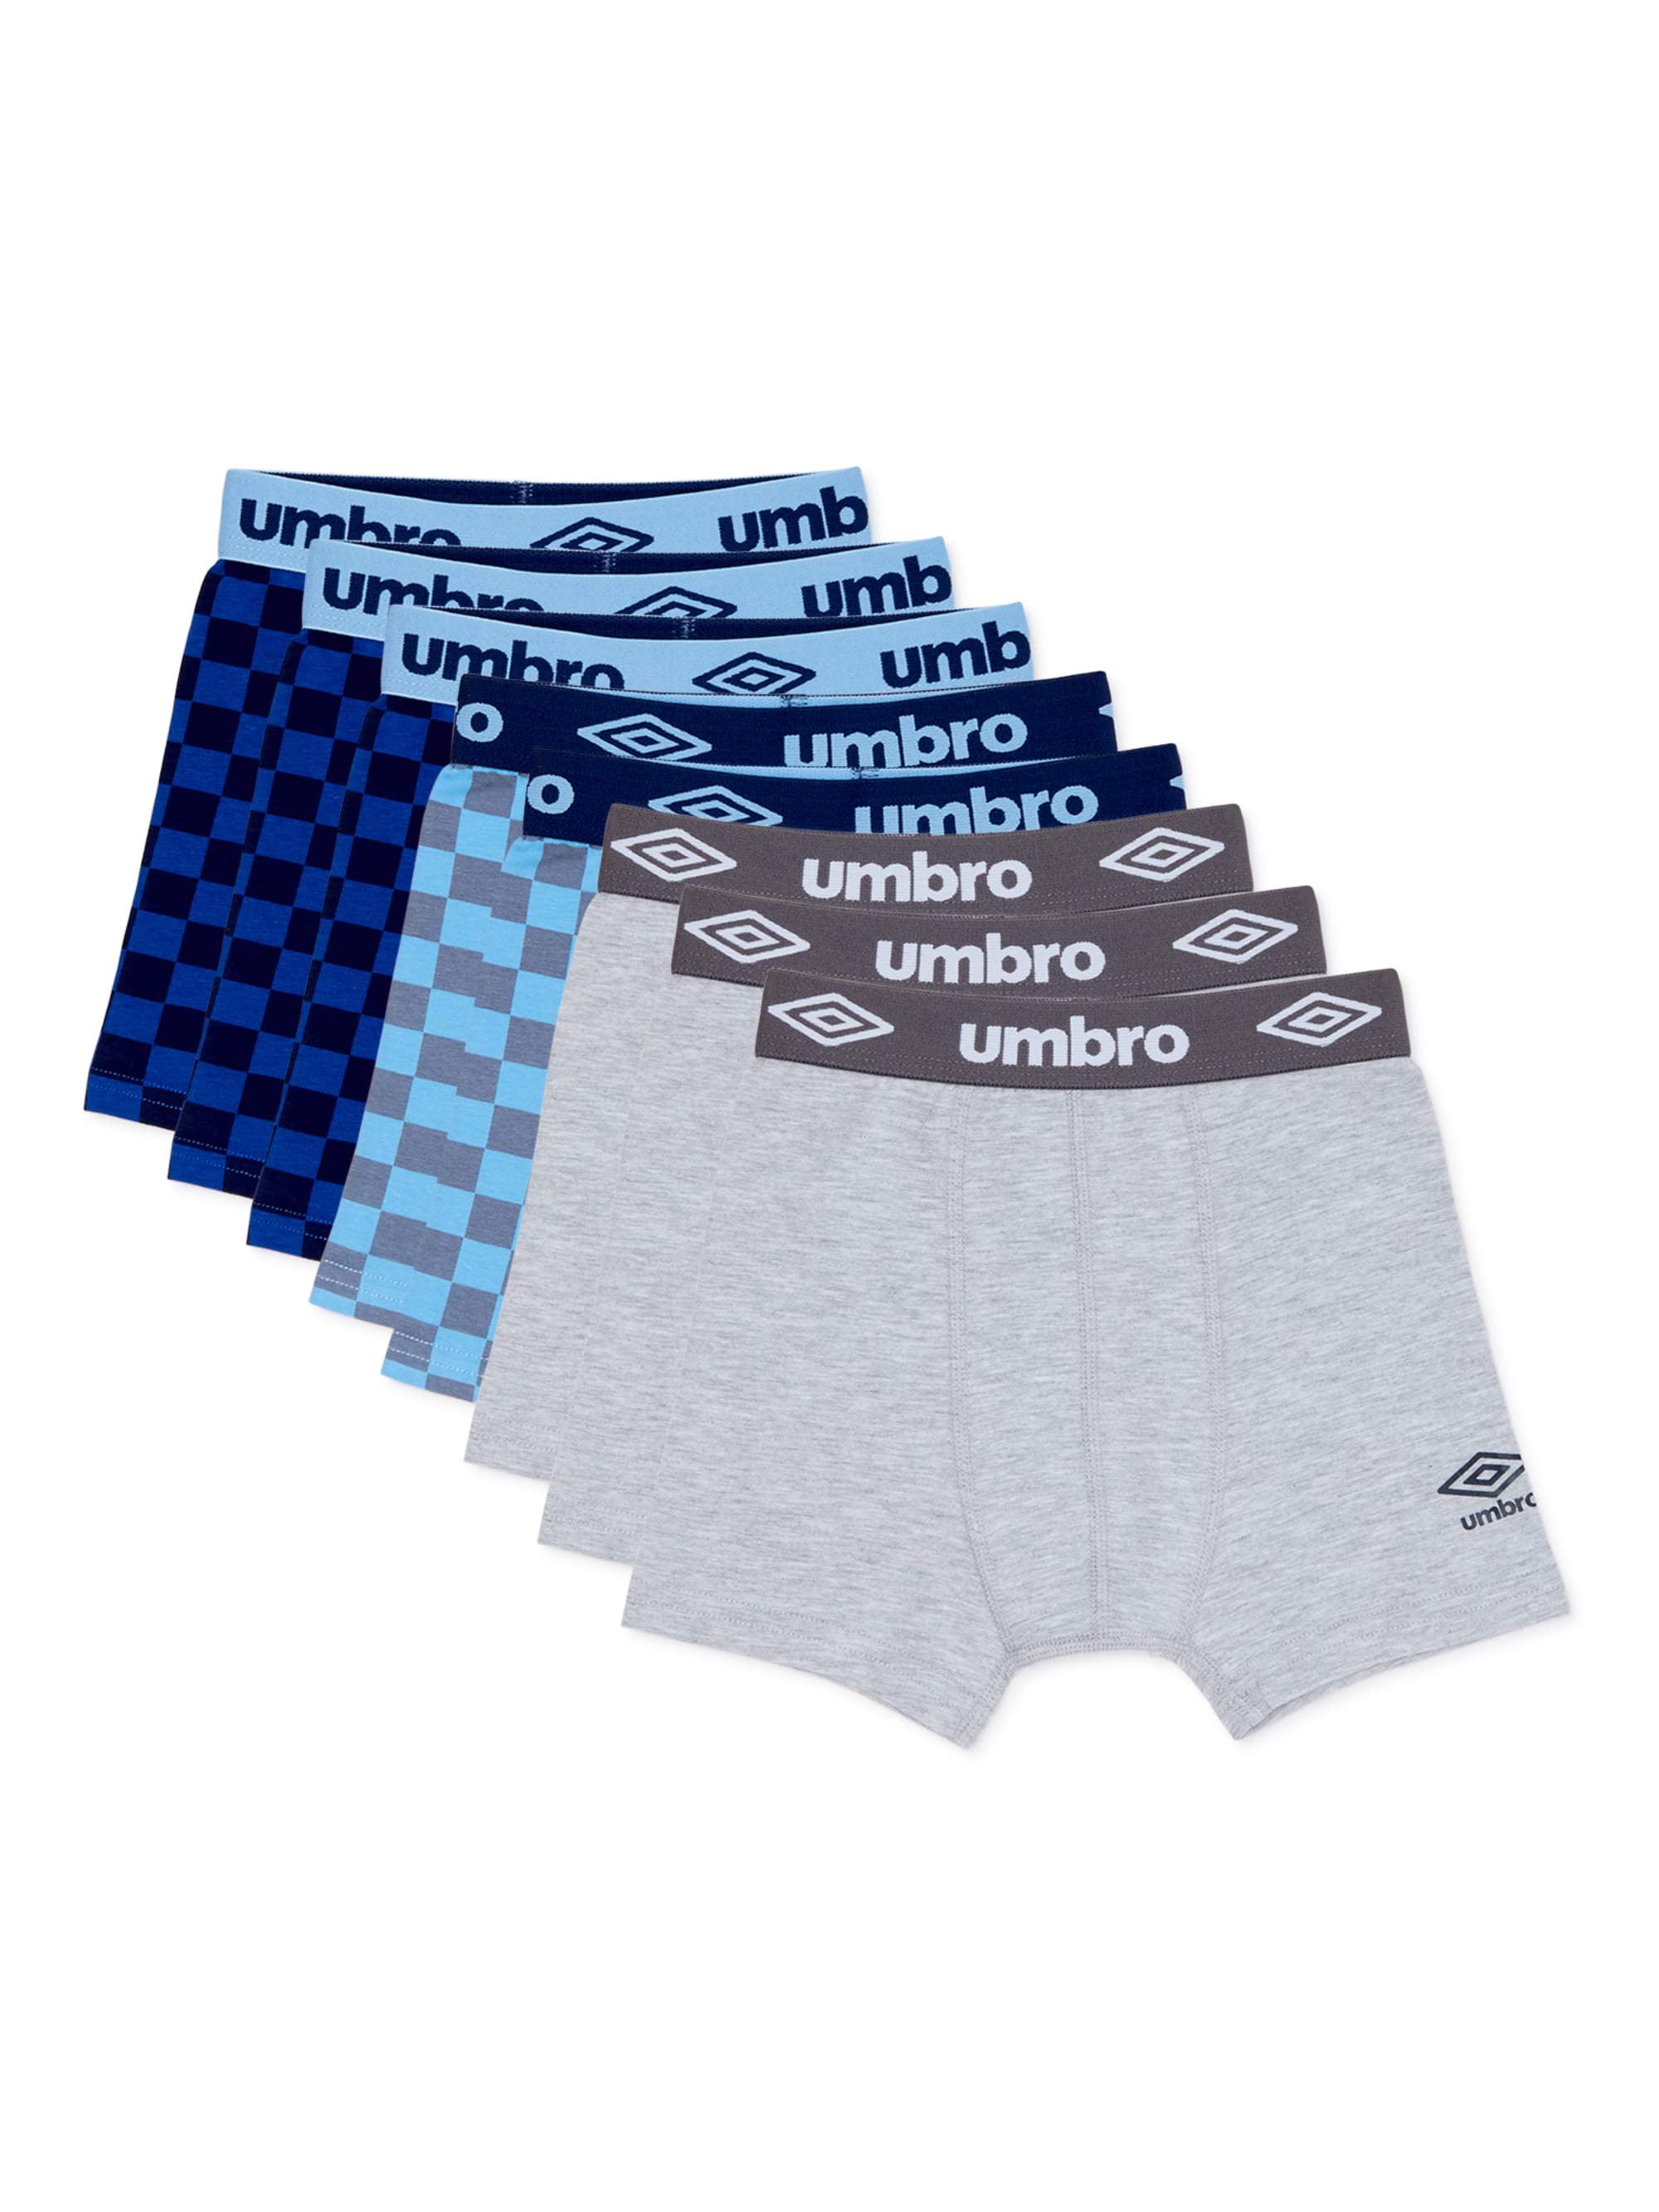 dorst smokkel consumptie Umbro Boys Underwear, 8 Pack Cotton Boxer Briefs Sizes XS-XL - Walmart.com